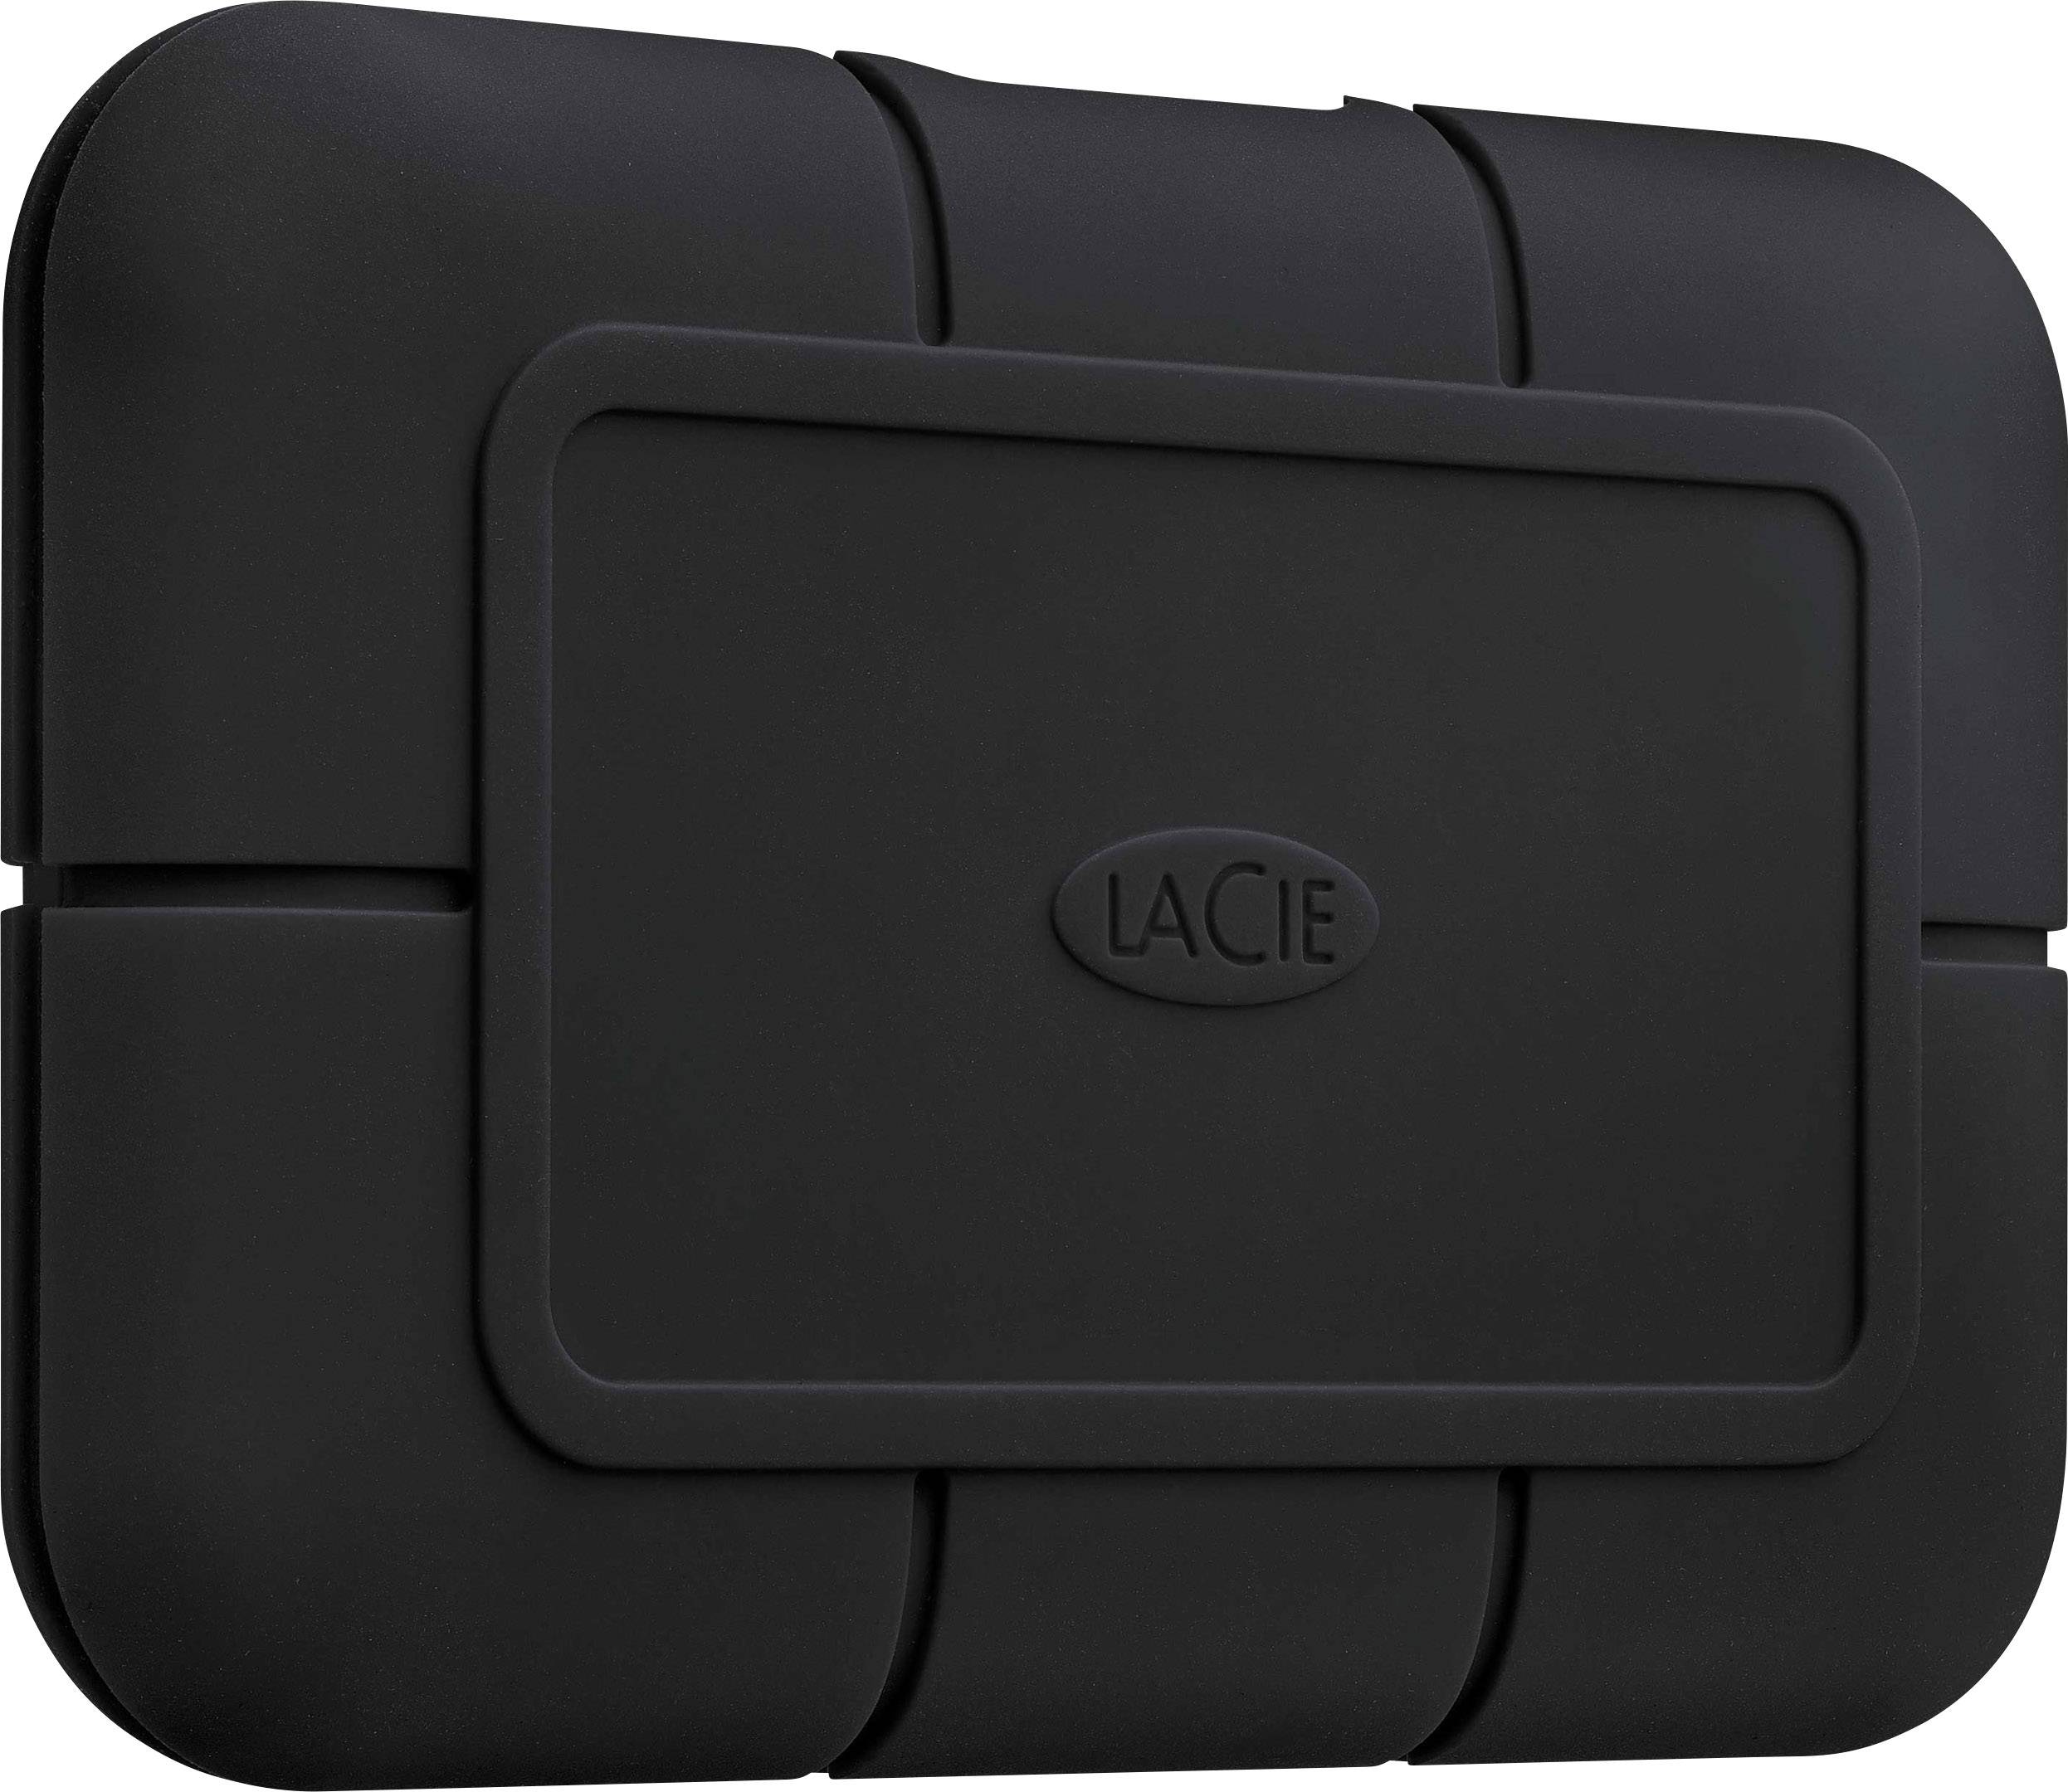 LaCie SSD PRO 1 Ekstern SSD-harddisk 3 Sort | Conradelektronik.dk